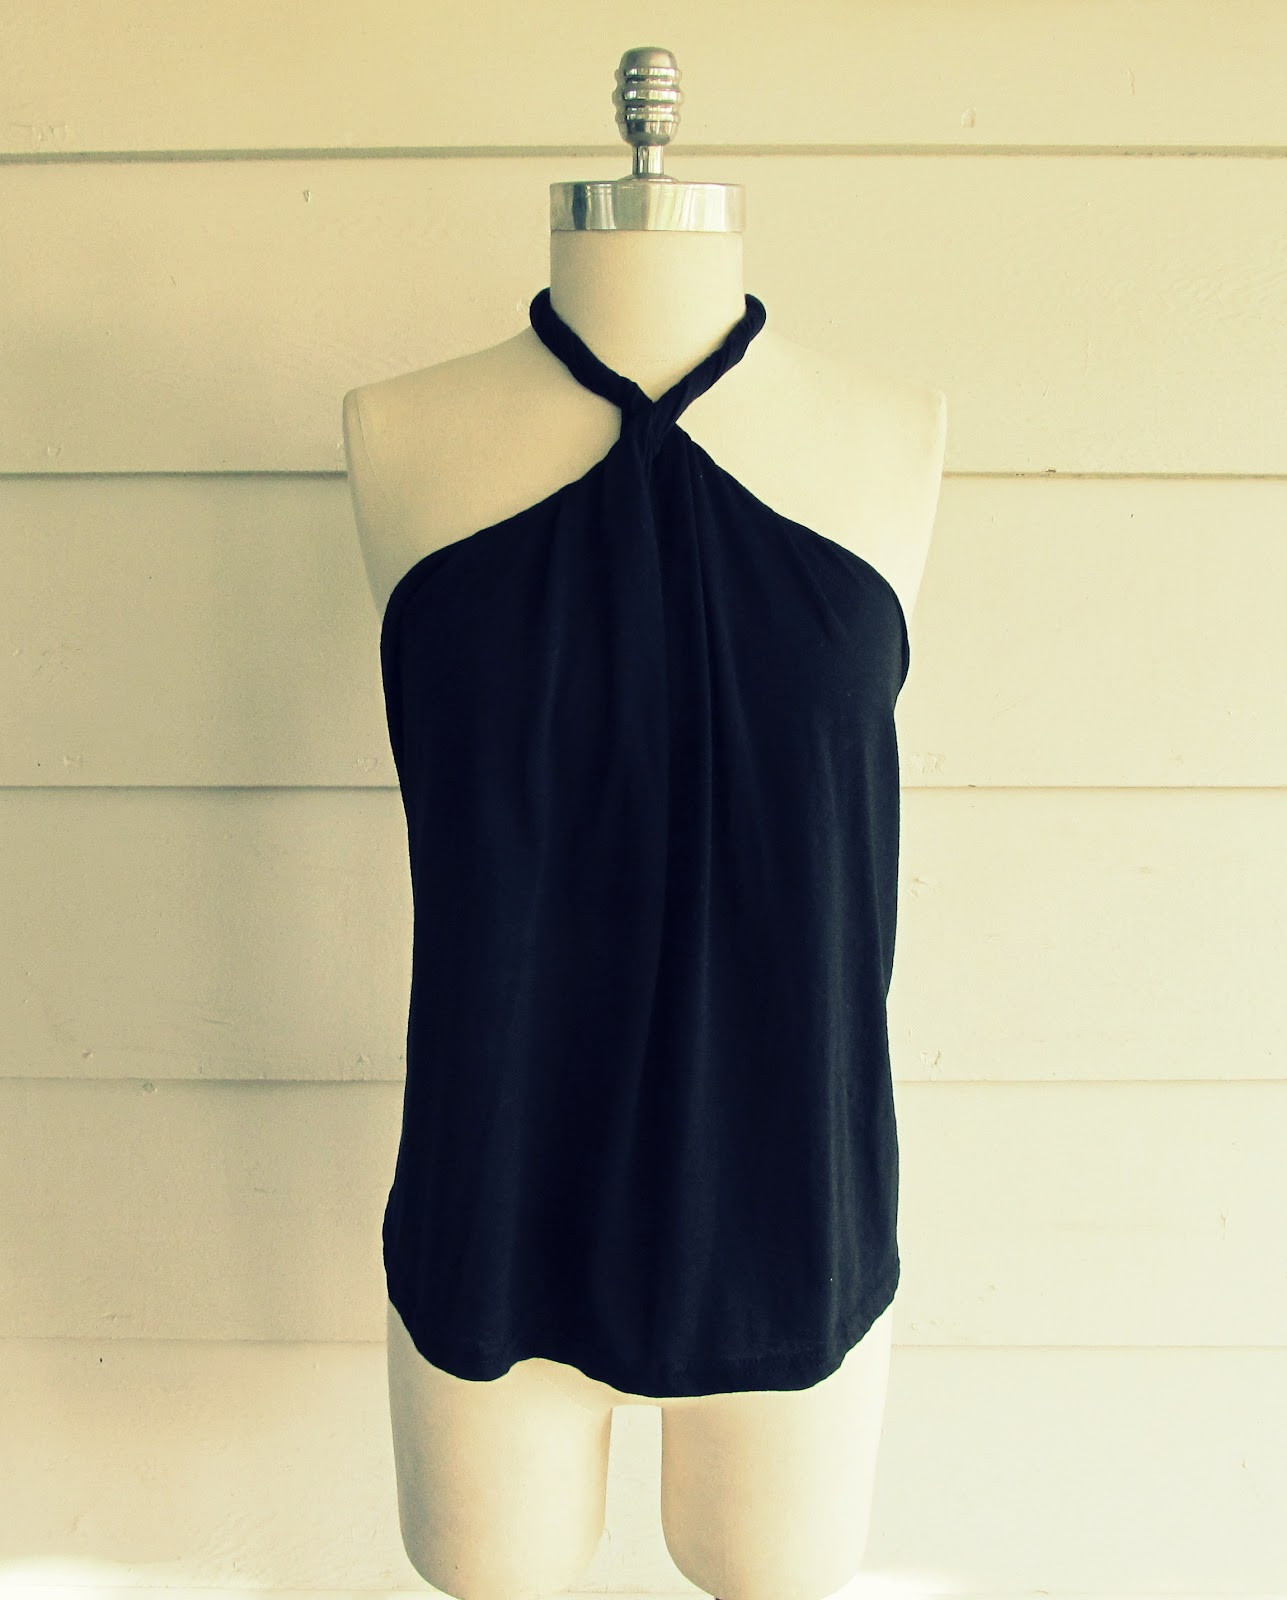 Best ideas about T Shirt DIY
. Save or Pin WobiSobi No Sew DIY Tee Shirt Halter 2 Now.